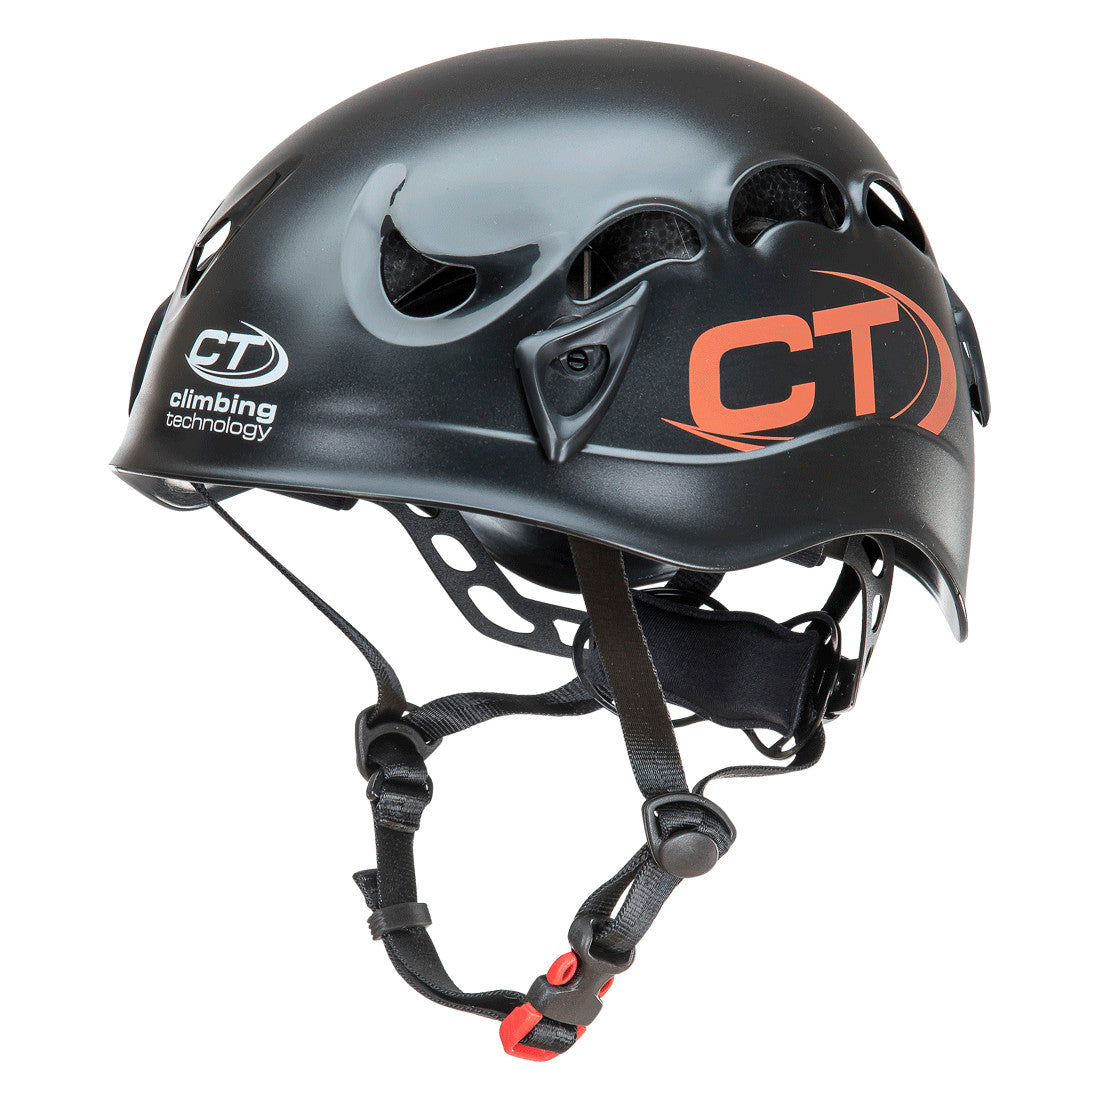 Climbing Technology Galaxy climbing helmet, in black colour